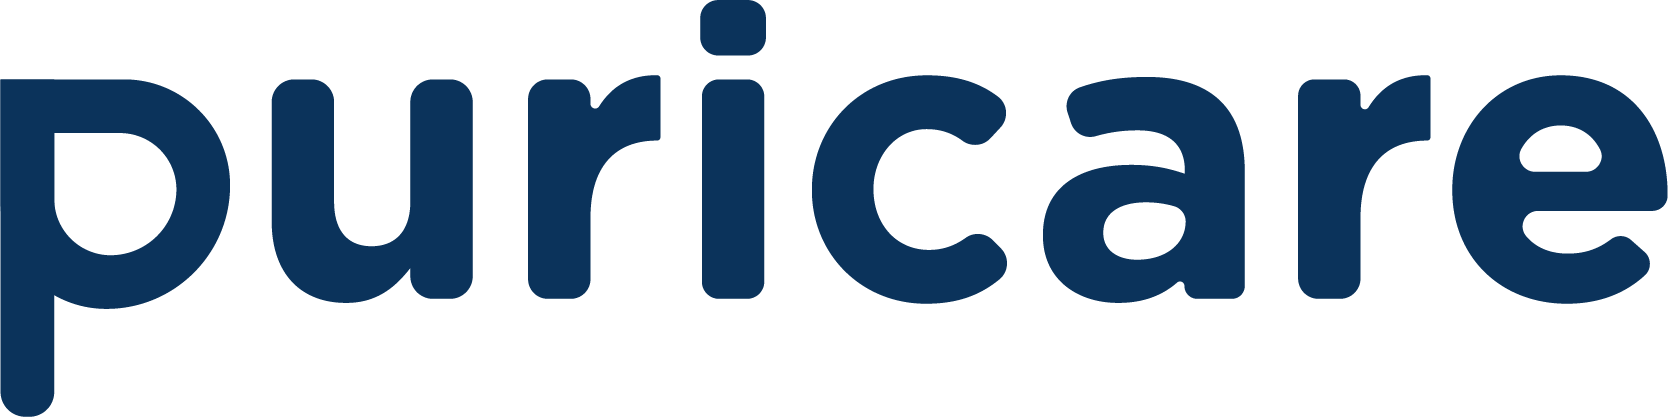 Puricare Solutions Pte. Ltd. company logo